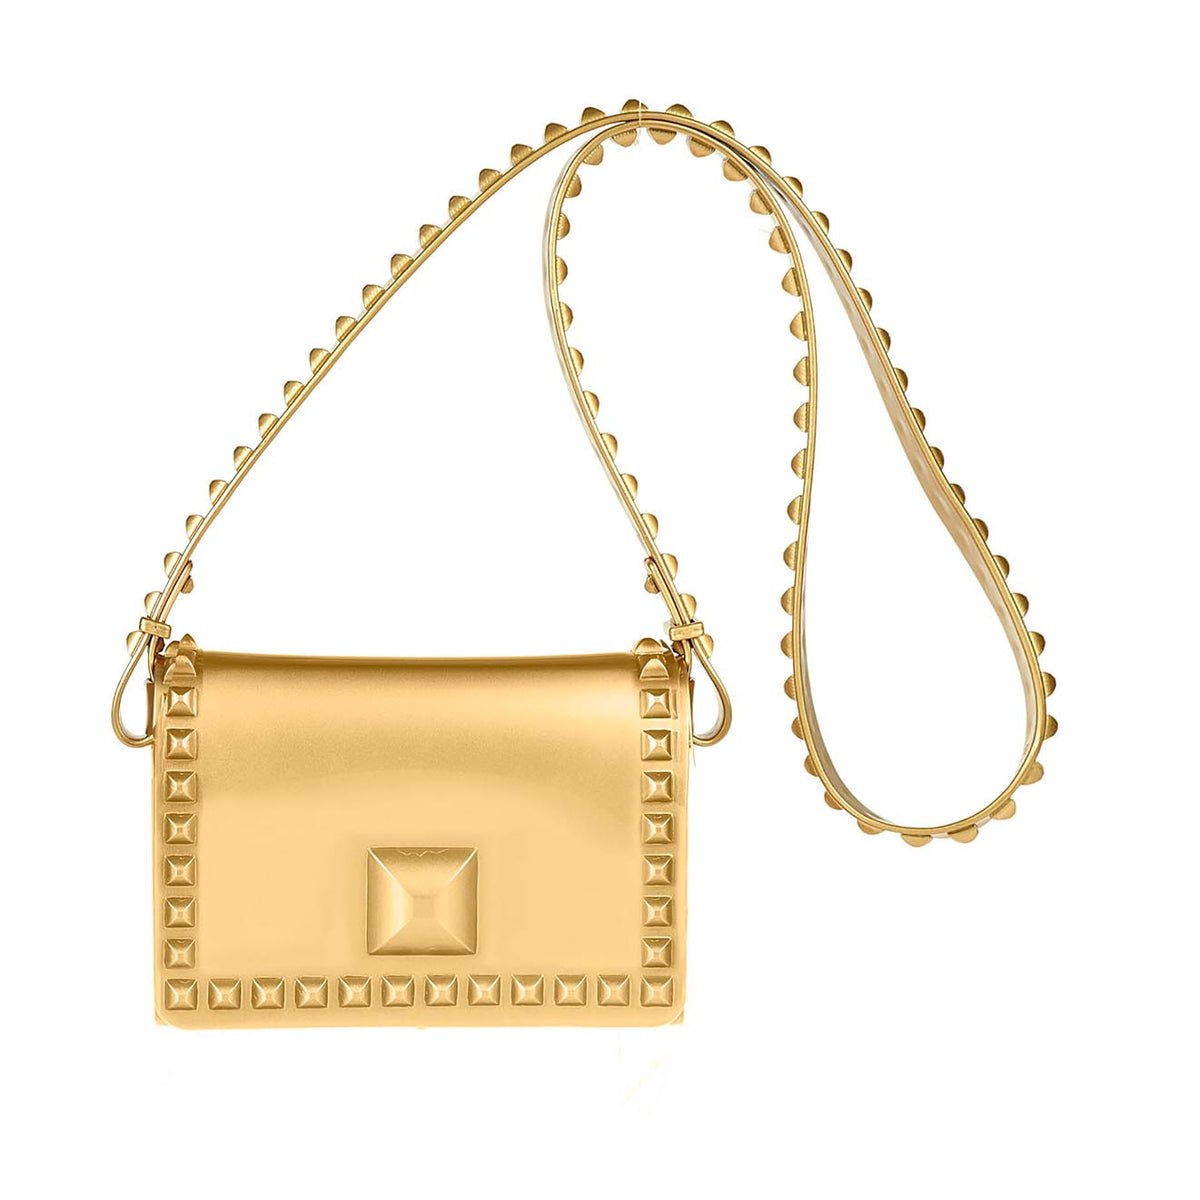 Gold crossbody metallic bags from Carmen Sol made in Italy, best shopping crossbody bag.